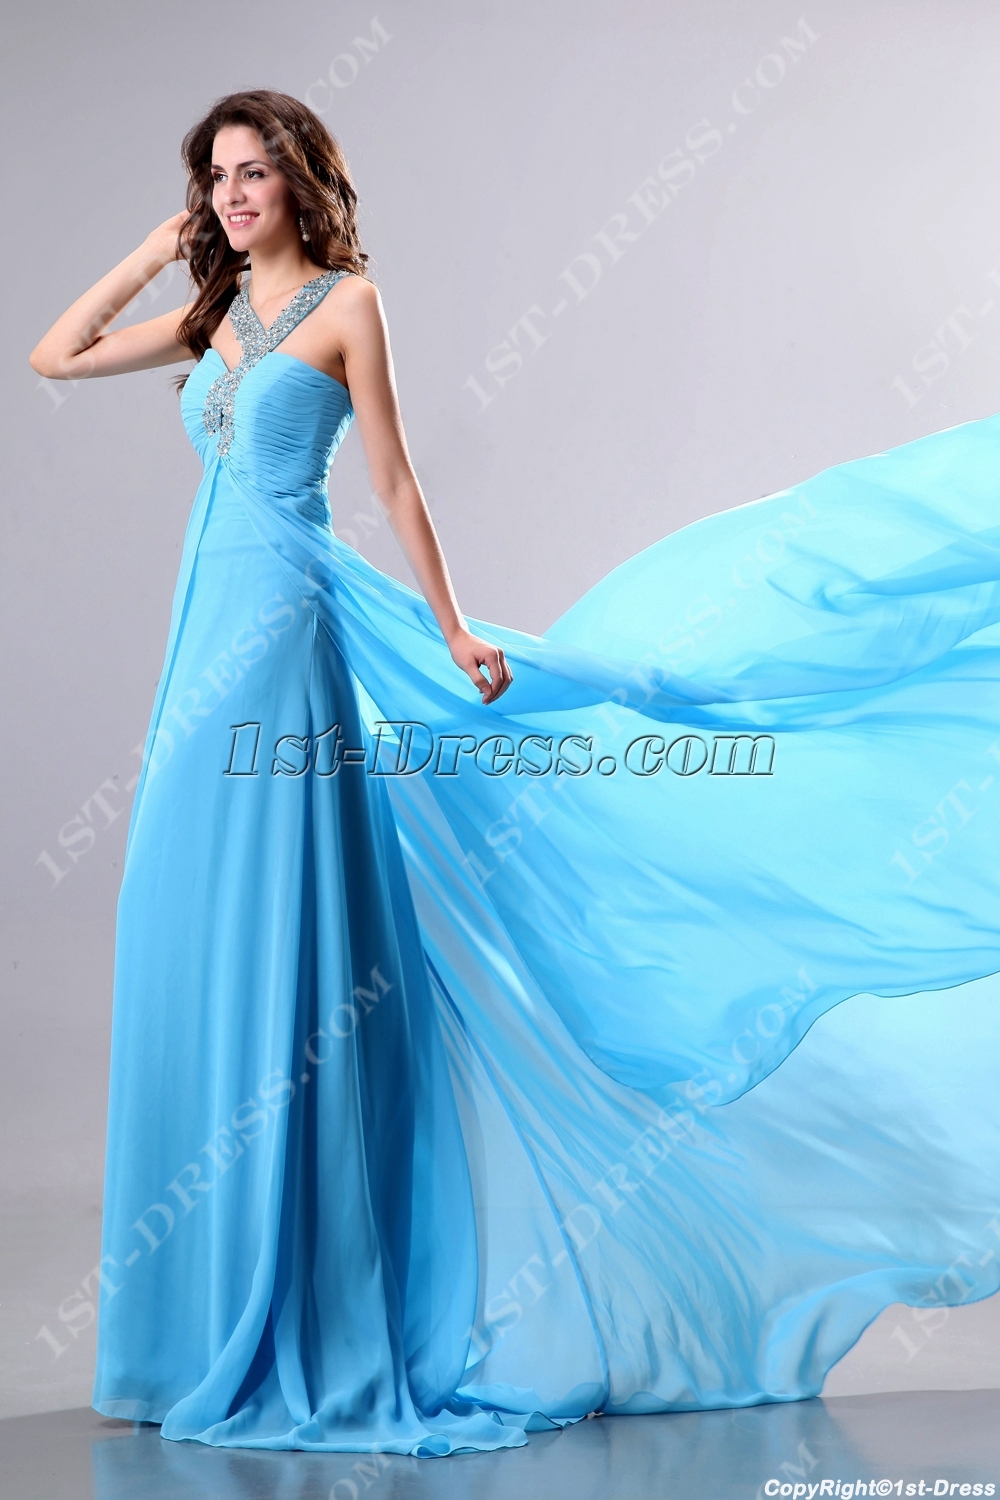 images/201311/big/Perfect-Flowing-Blue-Celebrity-Dress-3483-b-1-1384169985.jpg